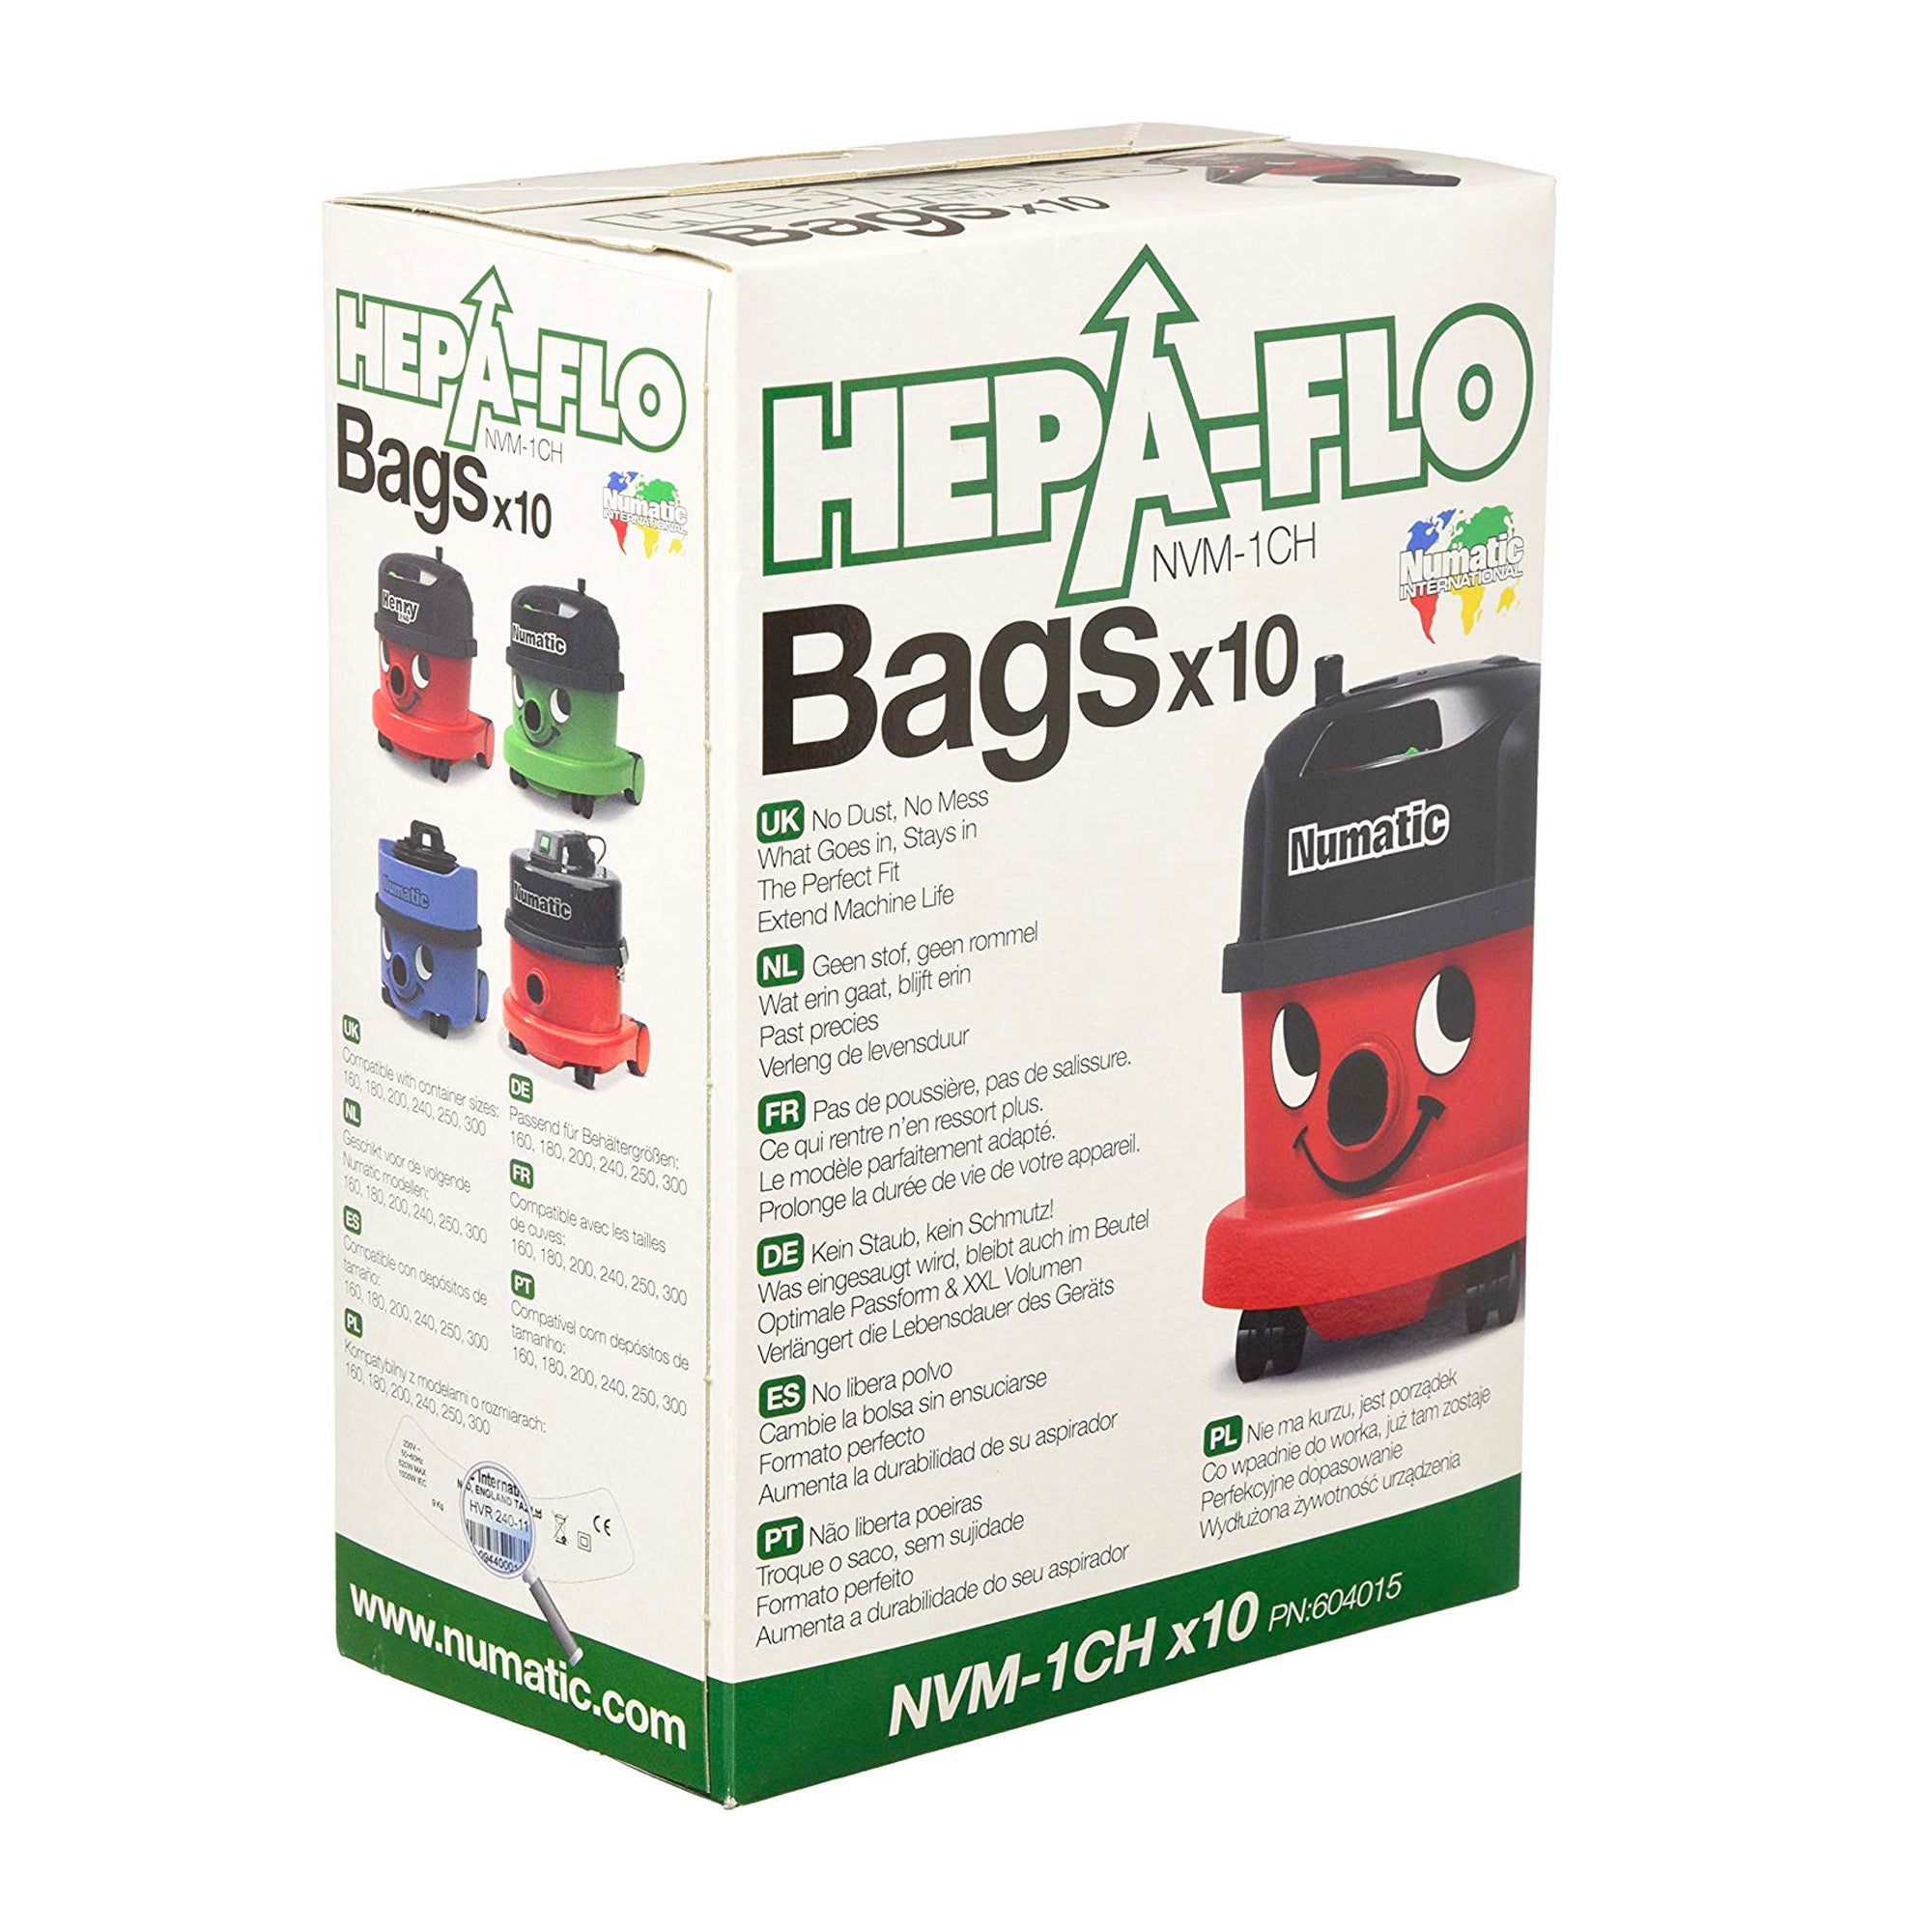 Numatic henry HEPA-Flo Vacuum Bags NVM-1CH. (10 Per Box)